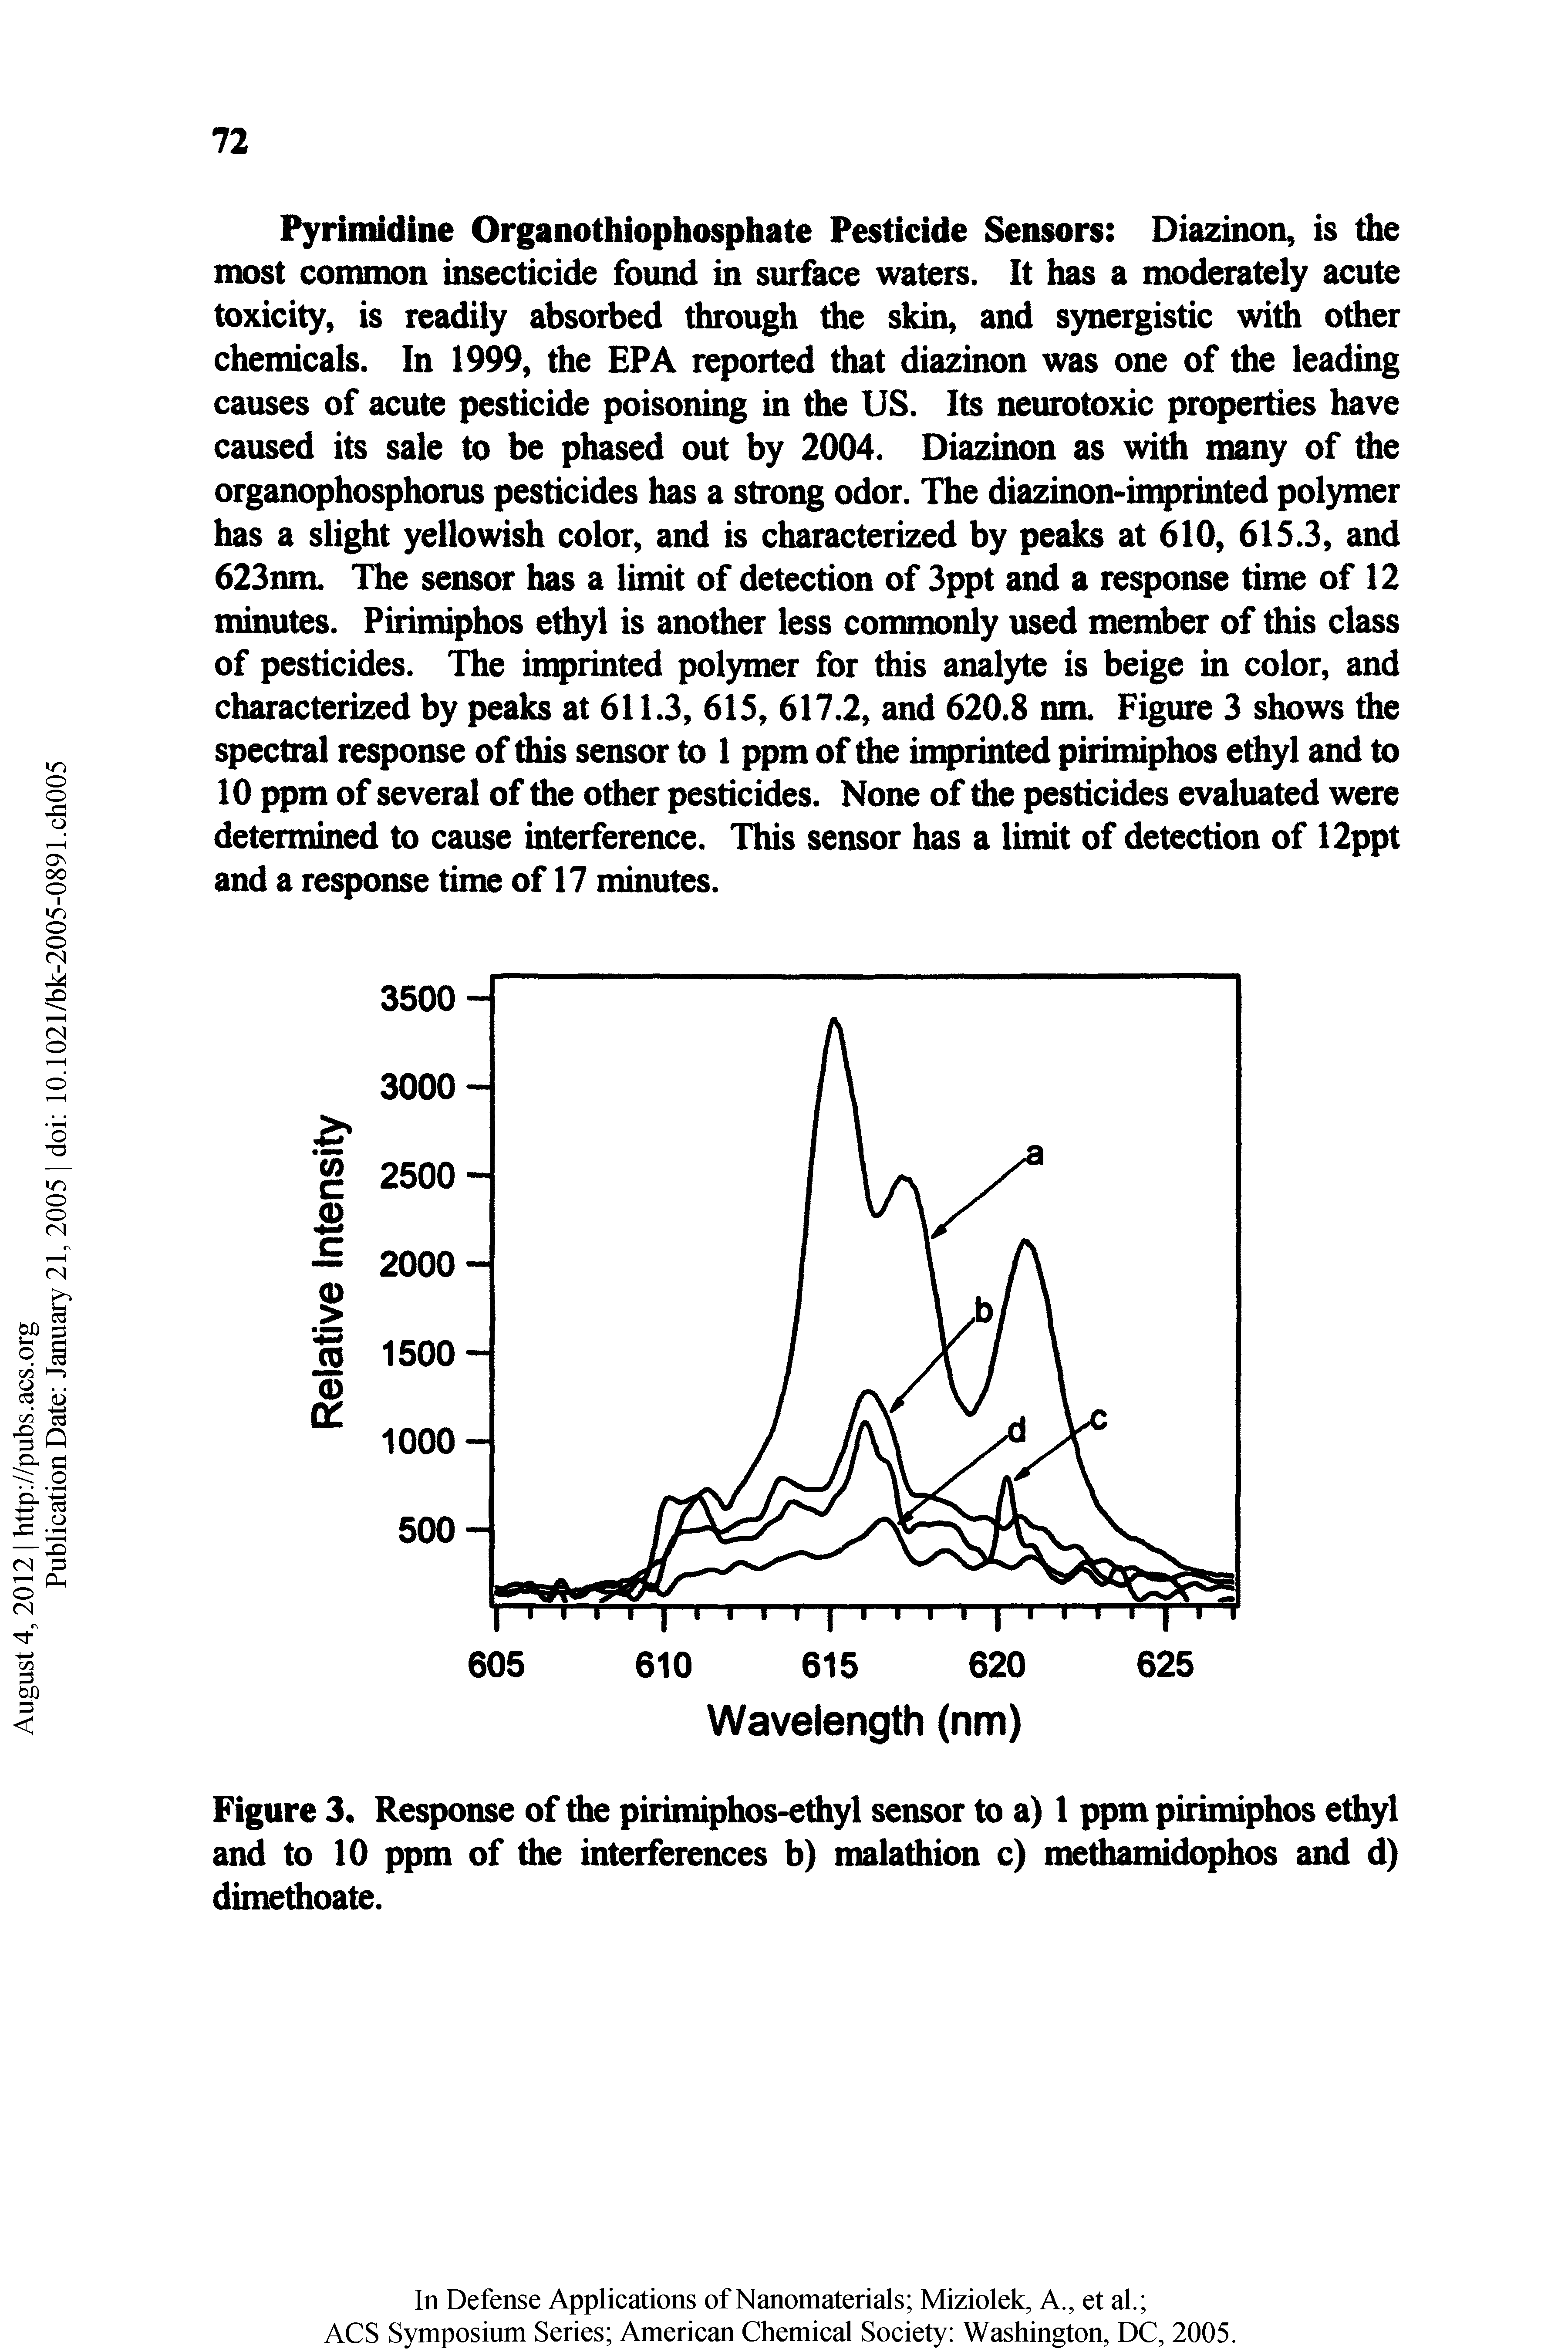 Figure 3. Response of the pirimiphos-ethyl sensor to a) 1 ppm pirimiphos ethyl and to 10 ppm of the interferences b) malathion c) methamidophos and d) dimethoate.